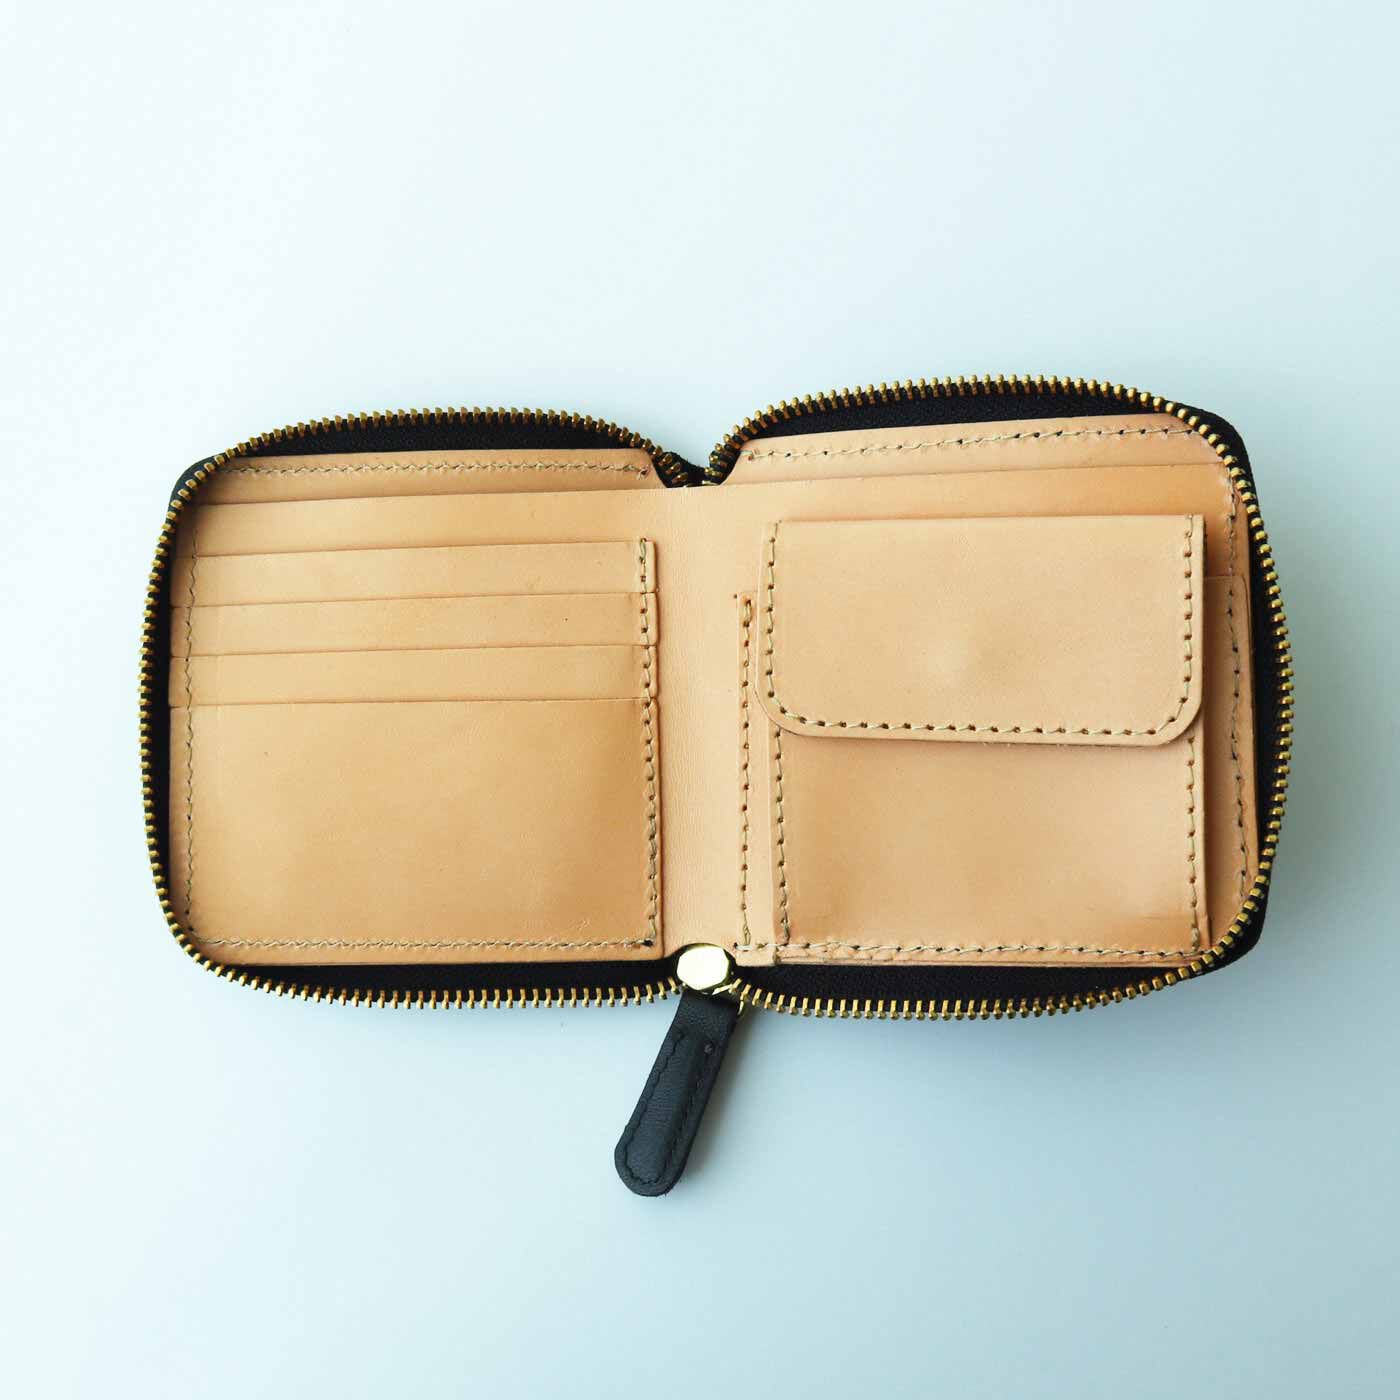 ＆Stories|福岡の鞄作家と作った 職人本革のラウンドジップ折り財布〈ブラック〉|シンプルな構造で、お札、小銭入れ、カードをすっきり収納。カードポケットは4つ。